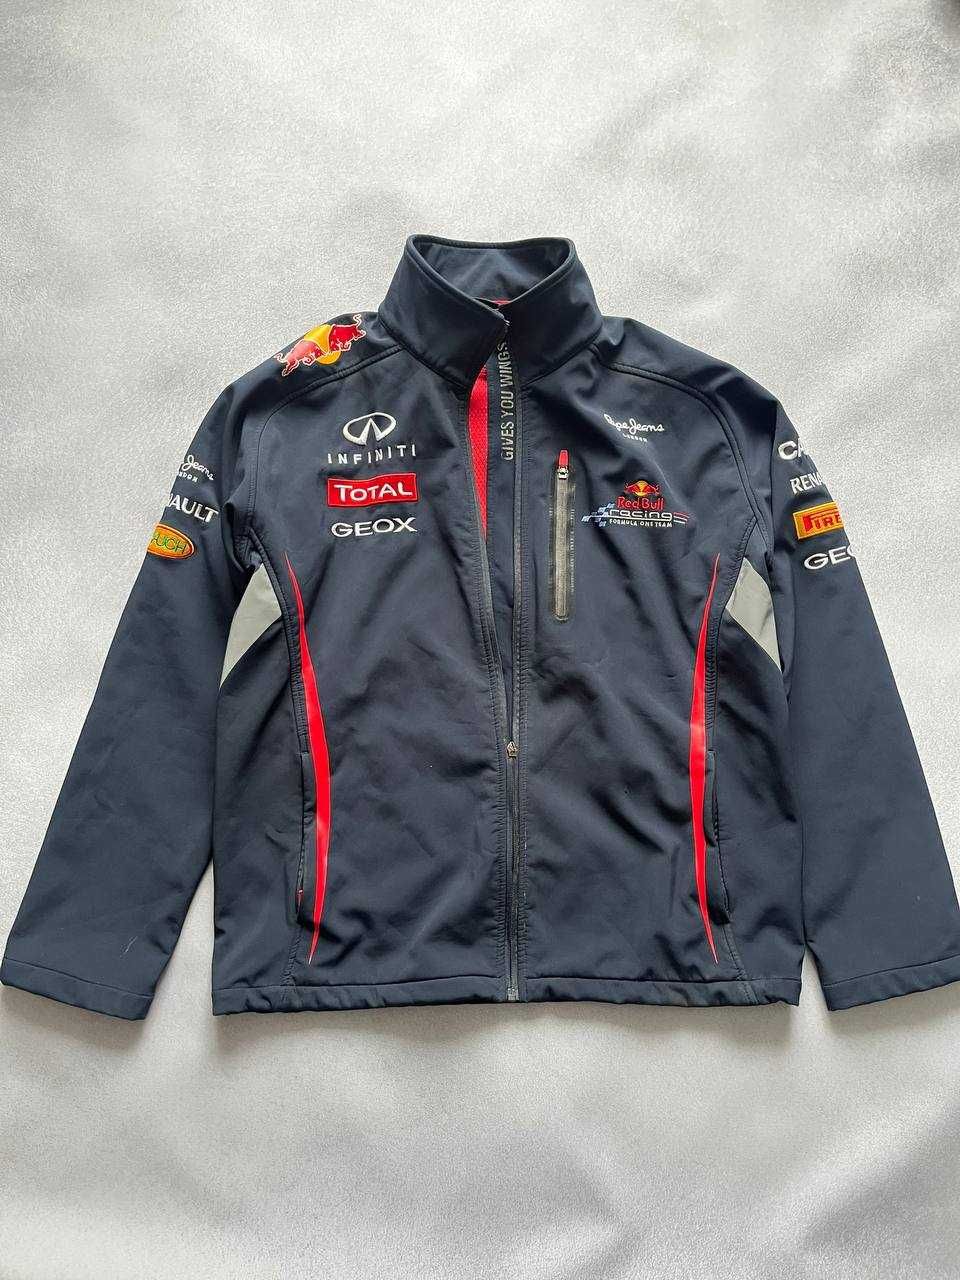 Кофтка куртка сфотшелл Red Bull Total infiniti Renault Geox Pirelli